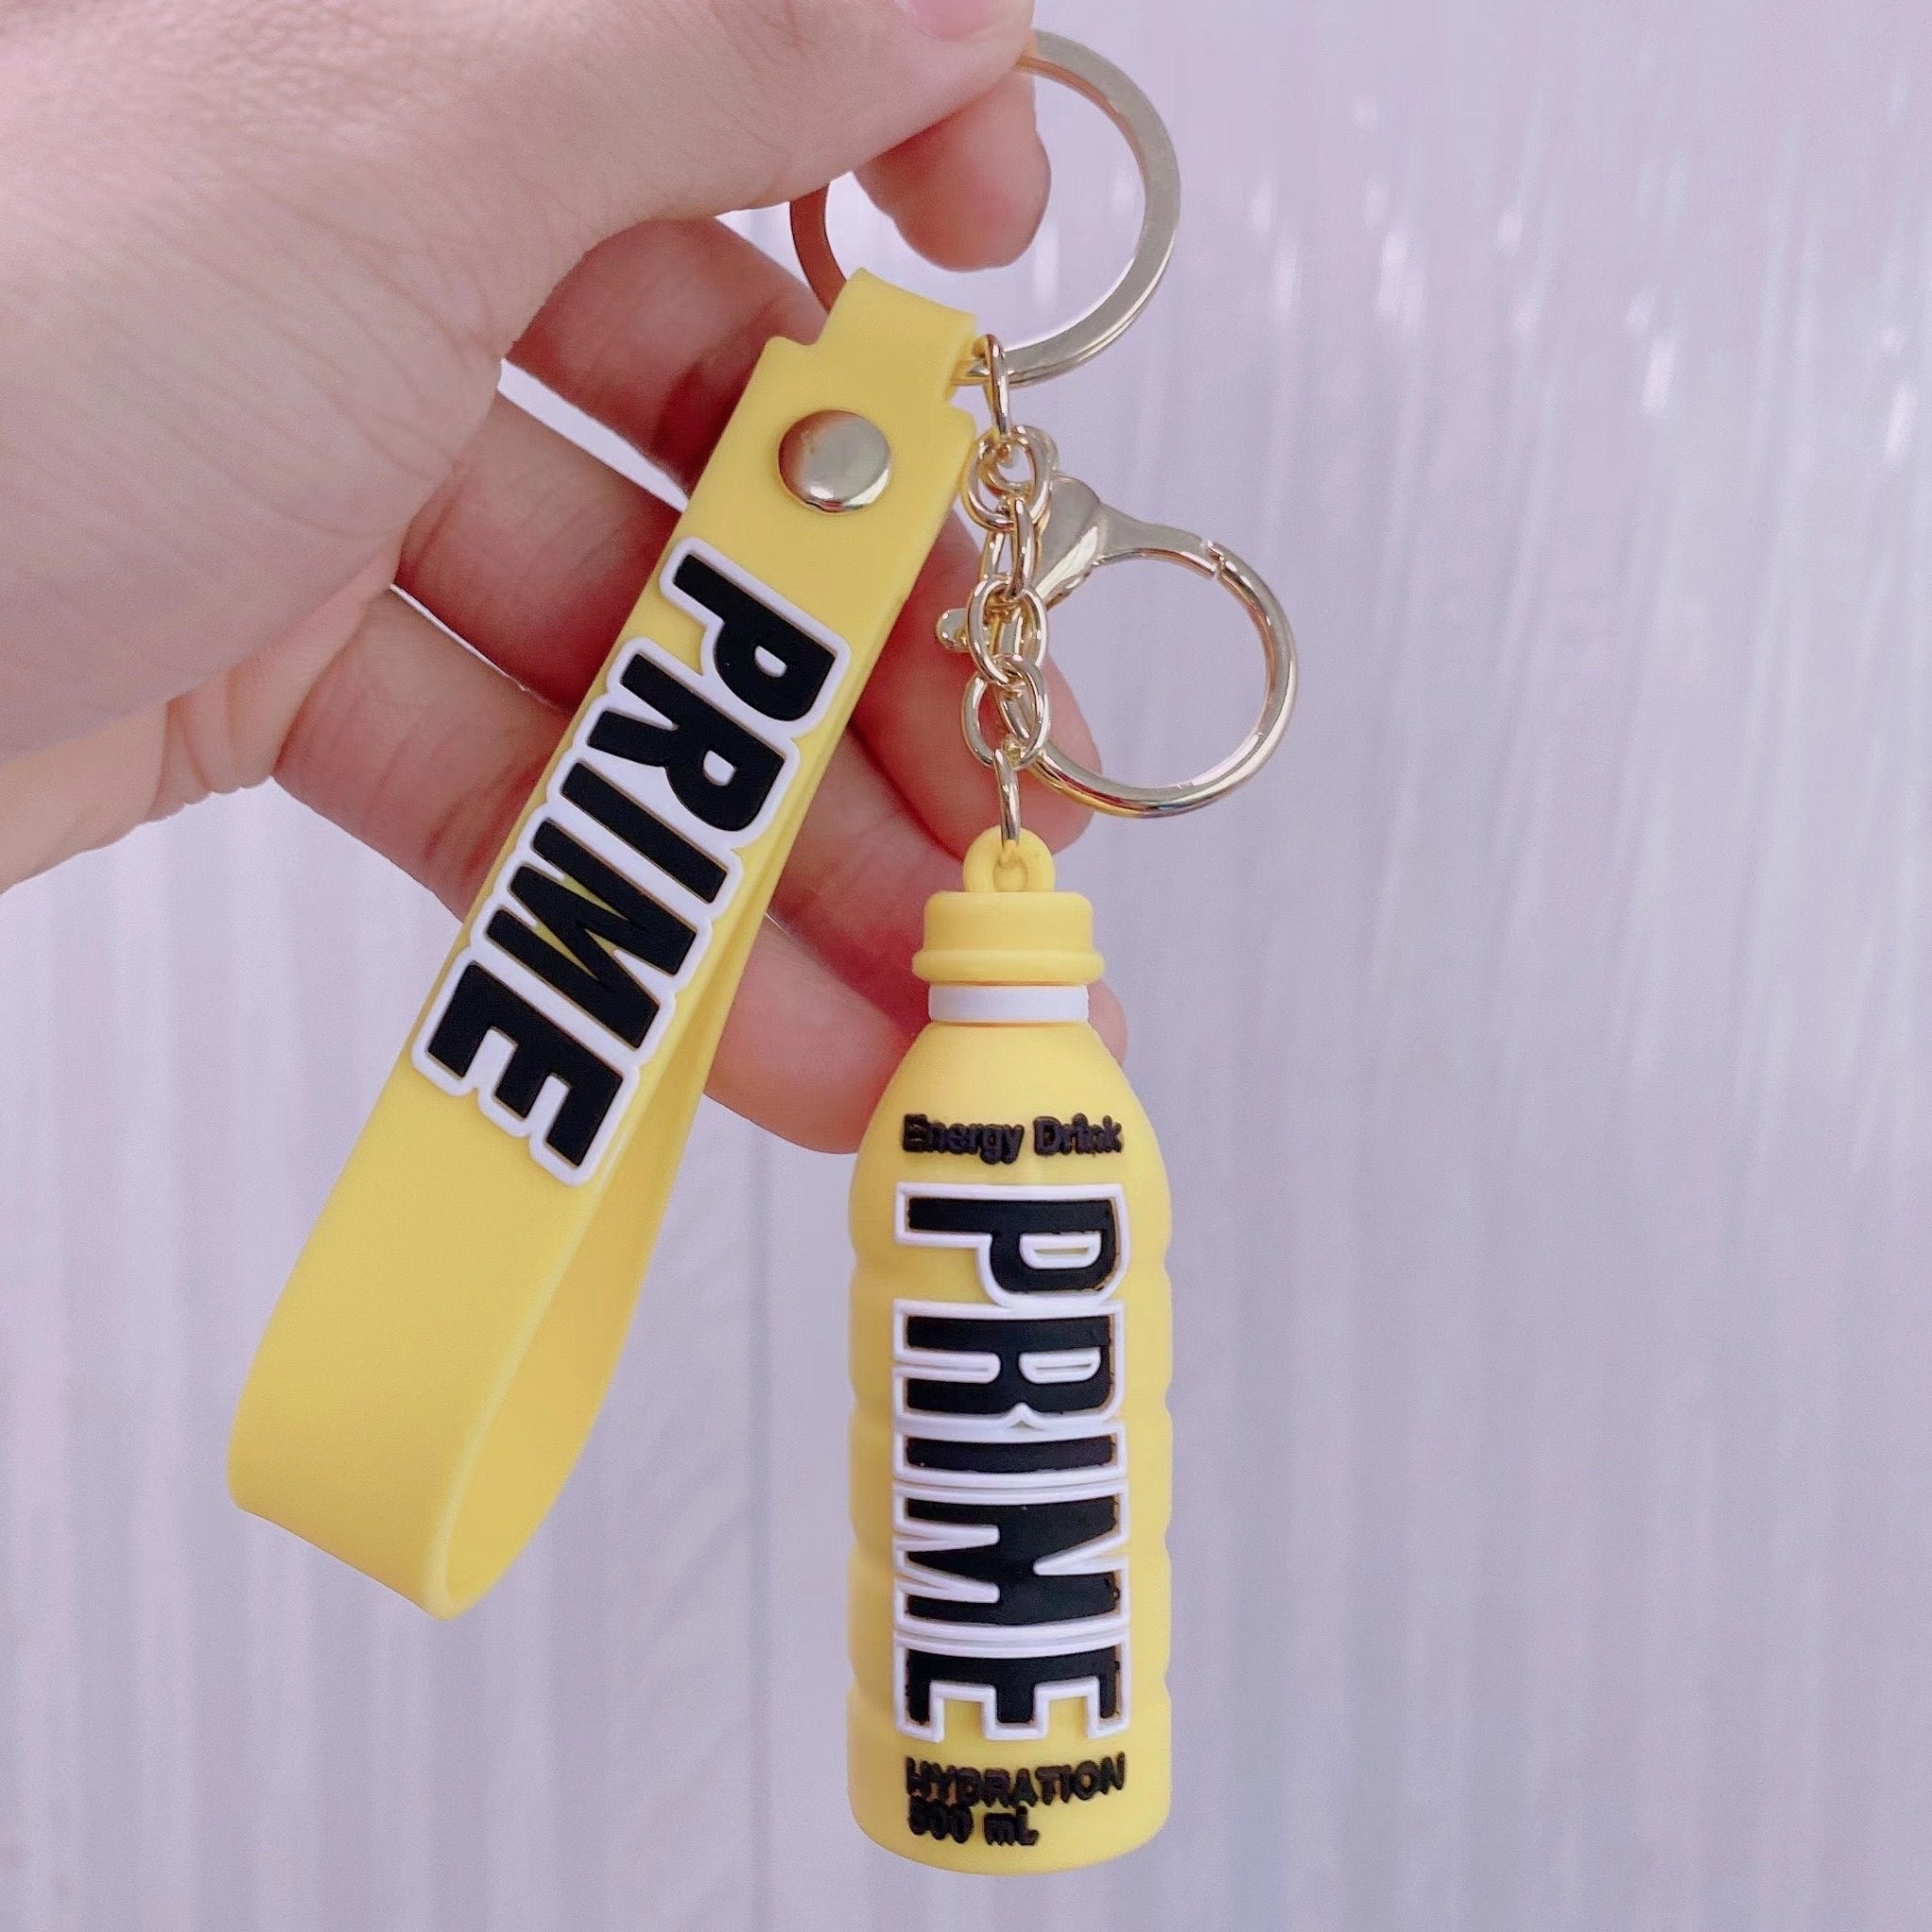 12 X Prime Drink Yellow Keychain - Bulk Bargain